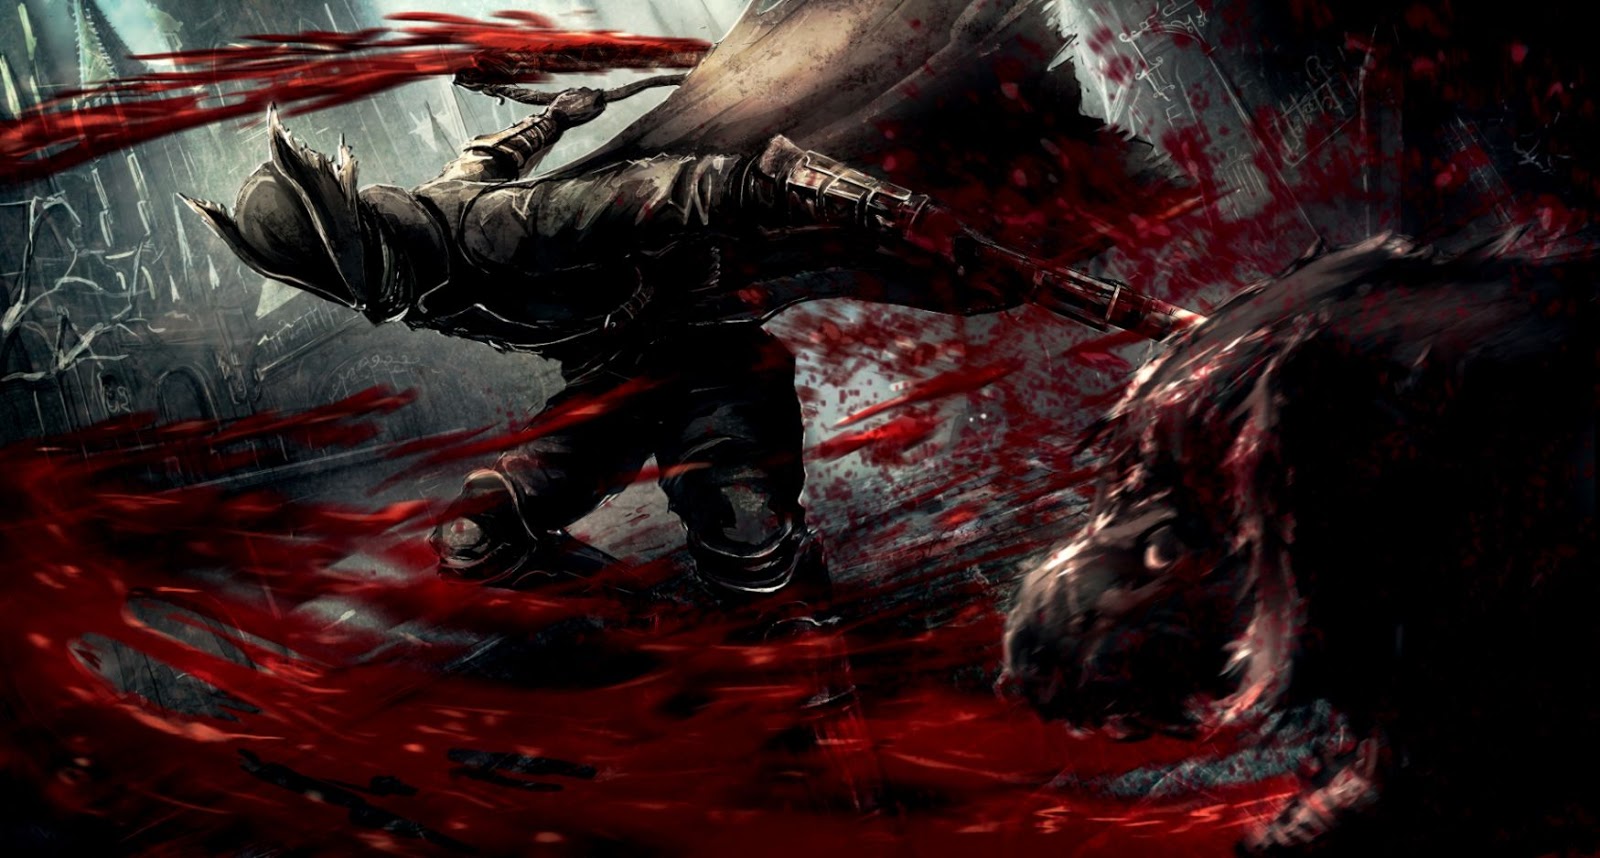 92 Bloodborne Hd Wallpapers Backgrounds Wallpaper Abyss - Bloodborne Blood - HD Wallpaper 